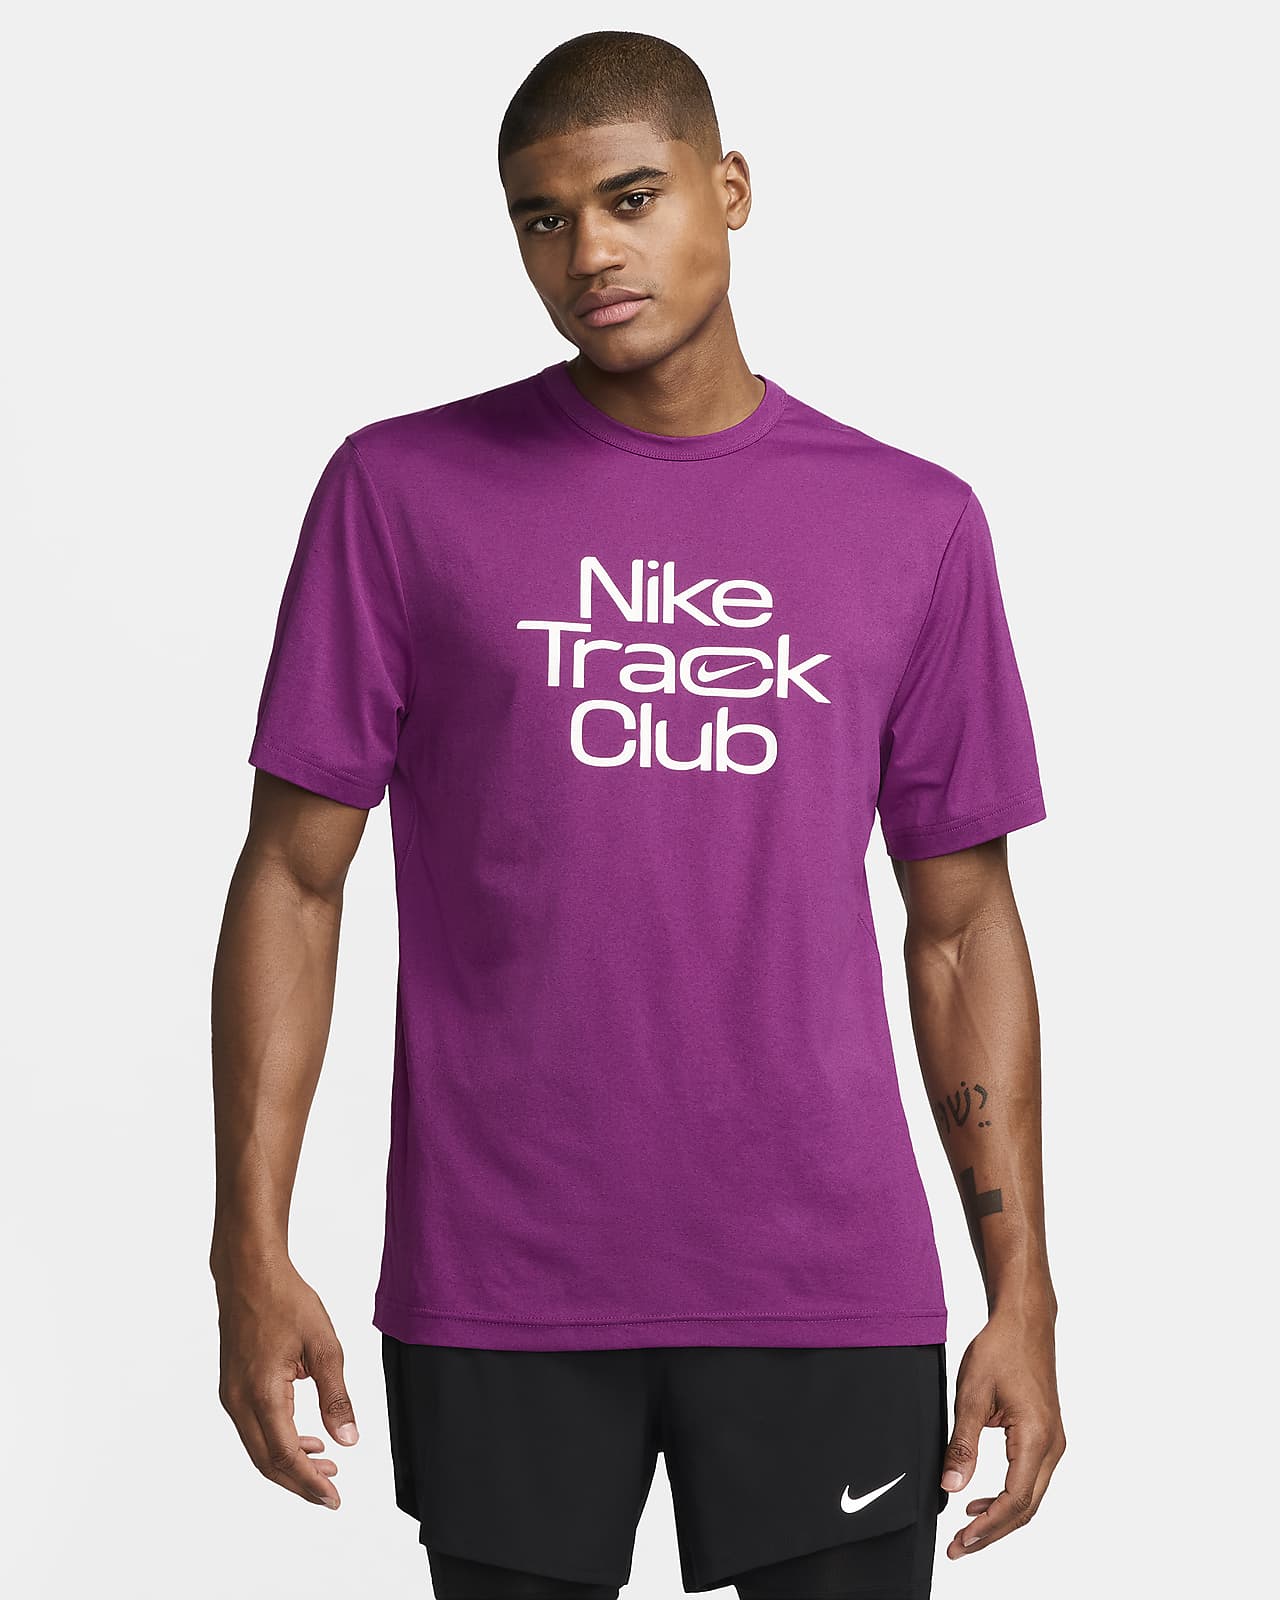 Nike Track Club Dri-FIT Kısa Kollu Erkek Koşu Üstü